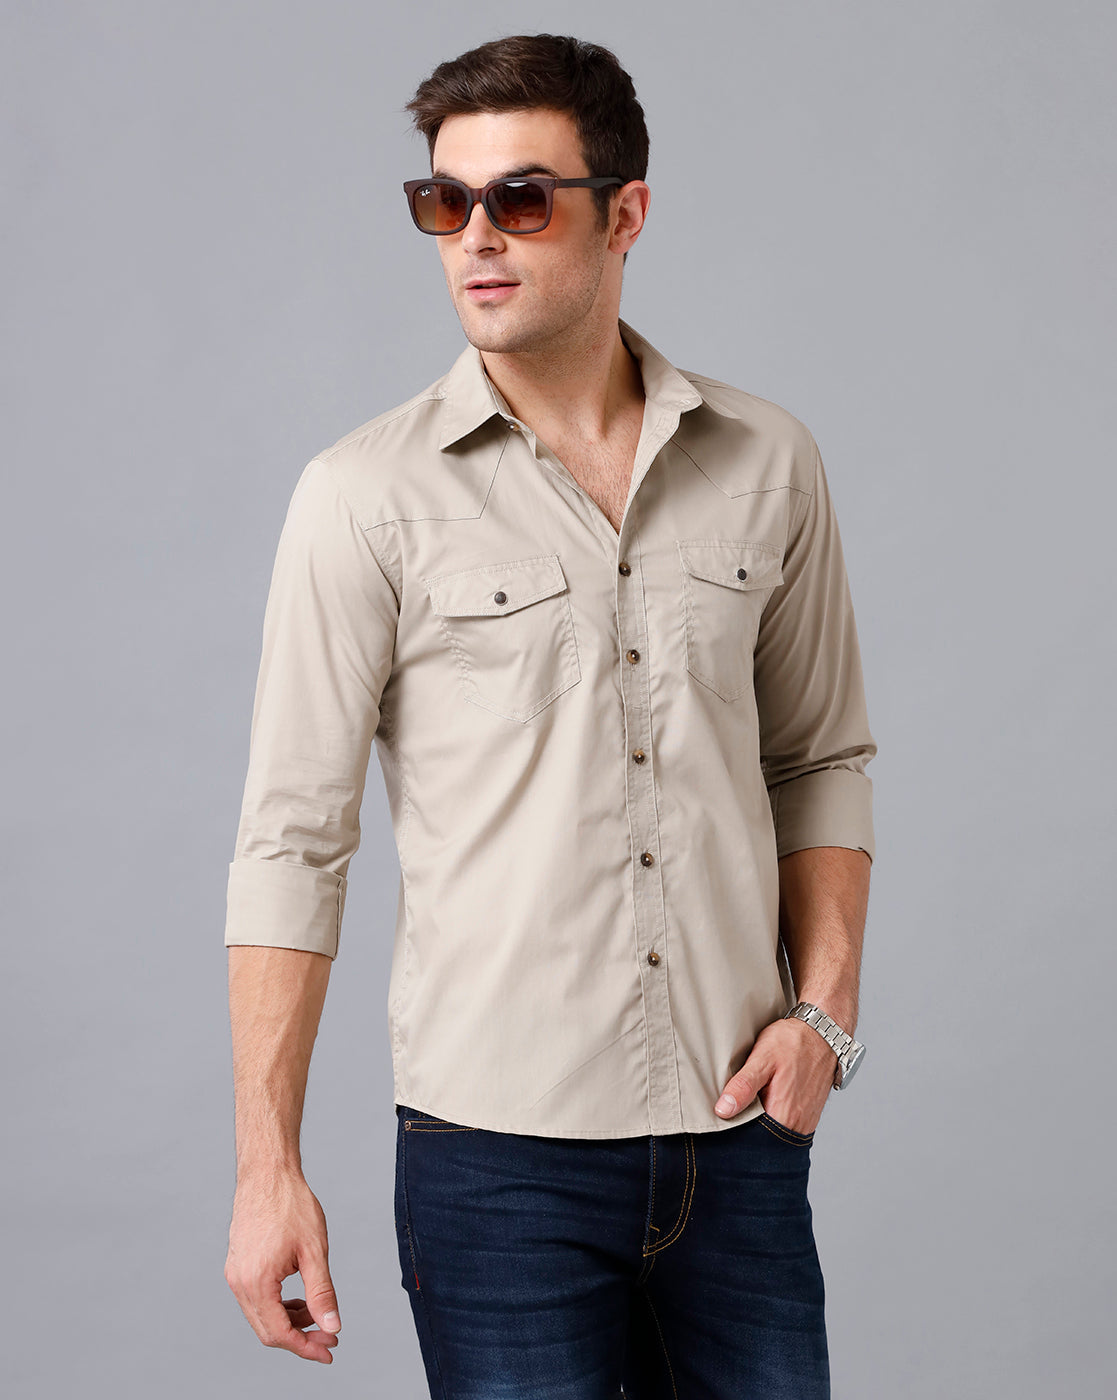 Khaki cotton shirt